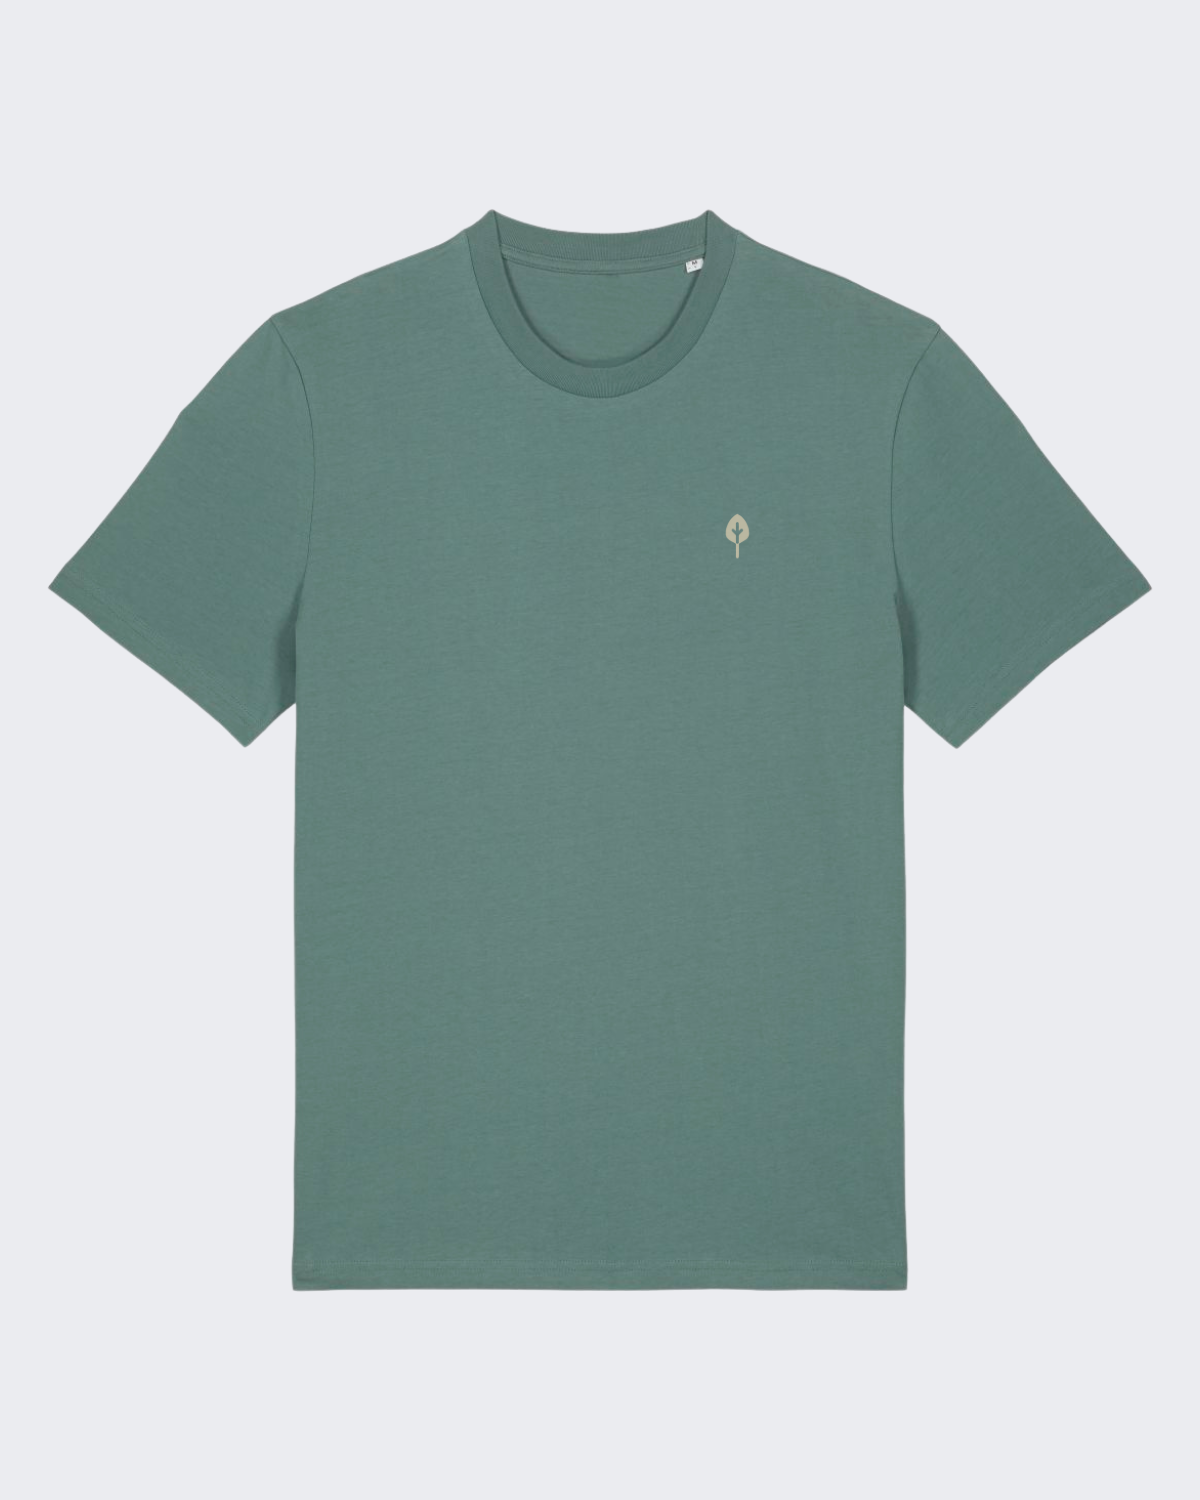 Together-Shirt "Green"